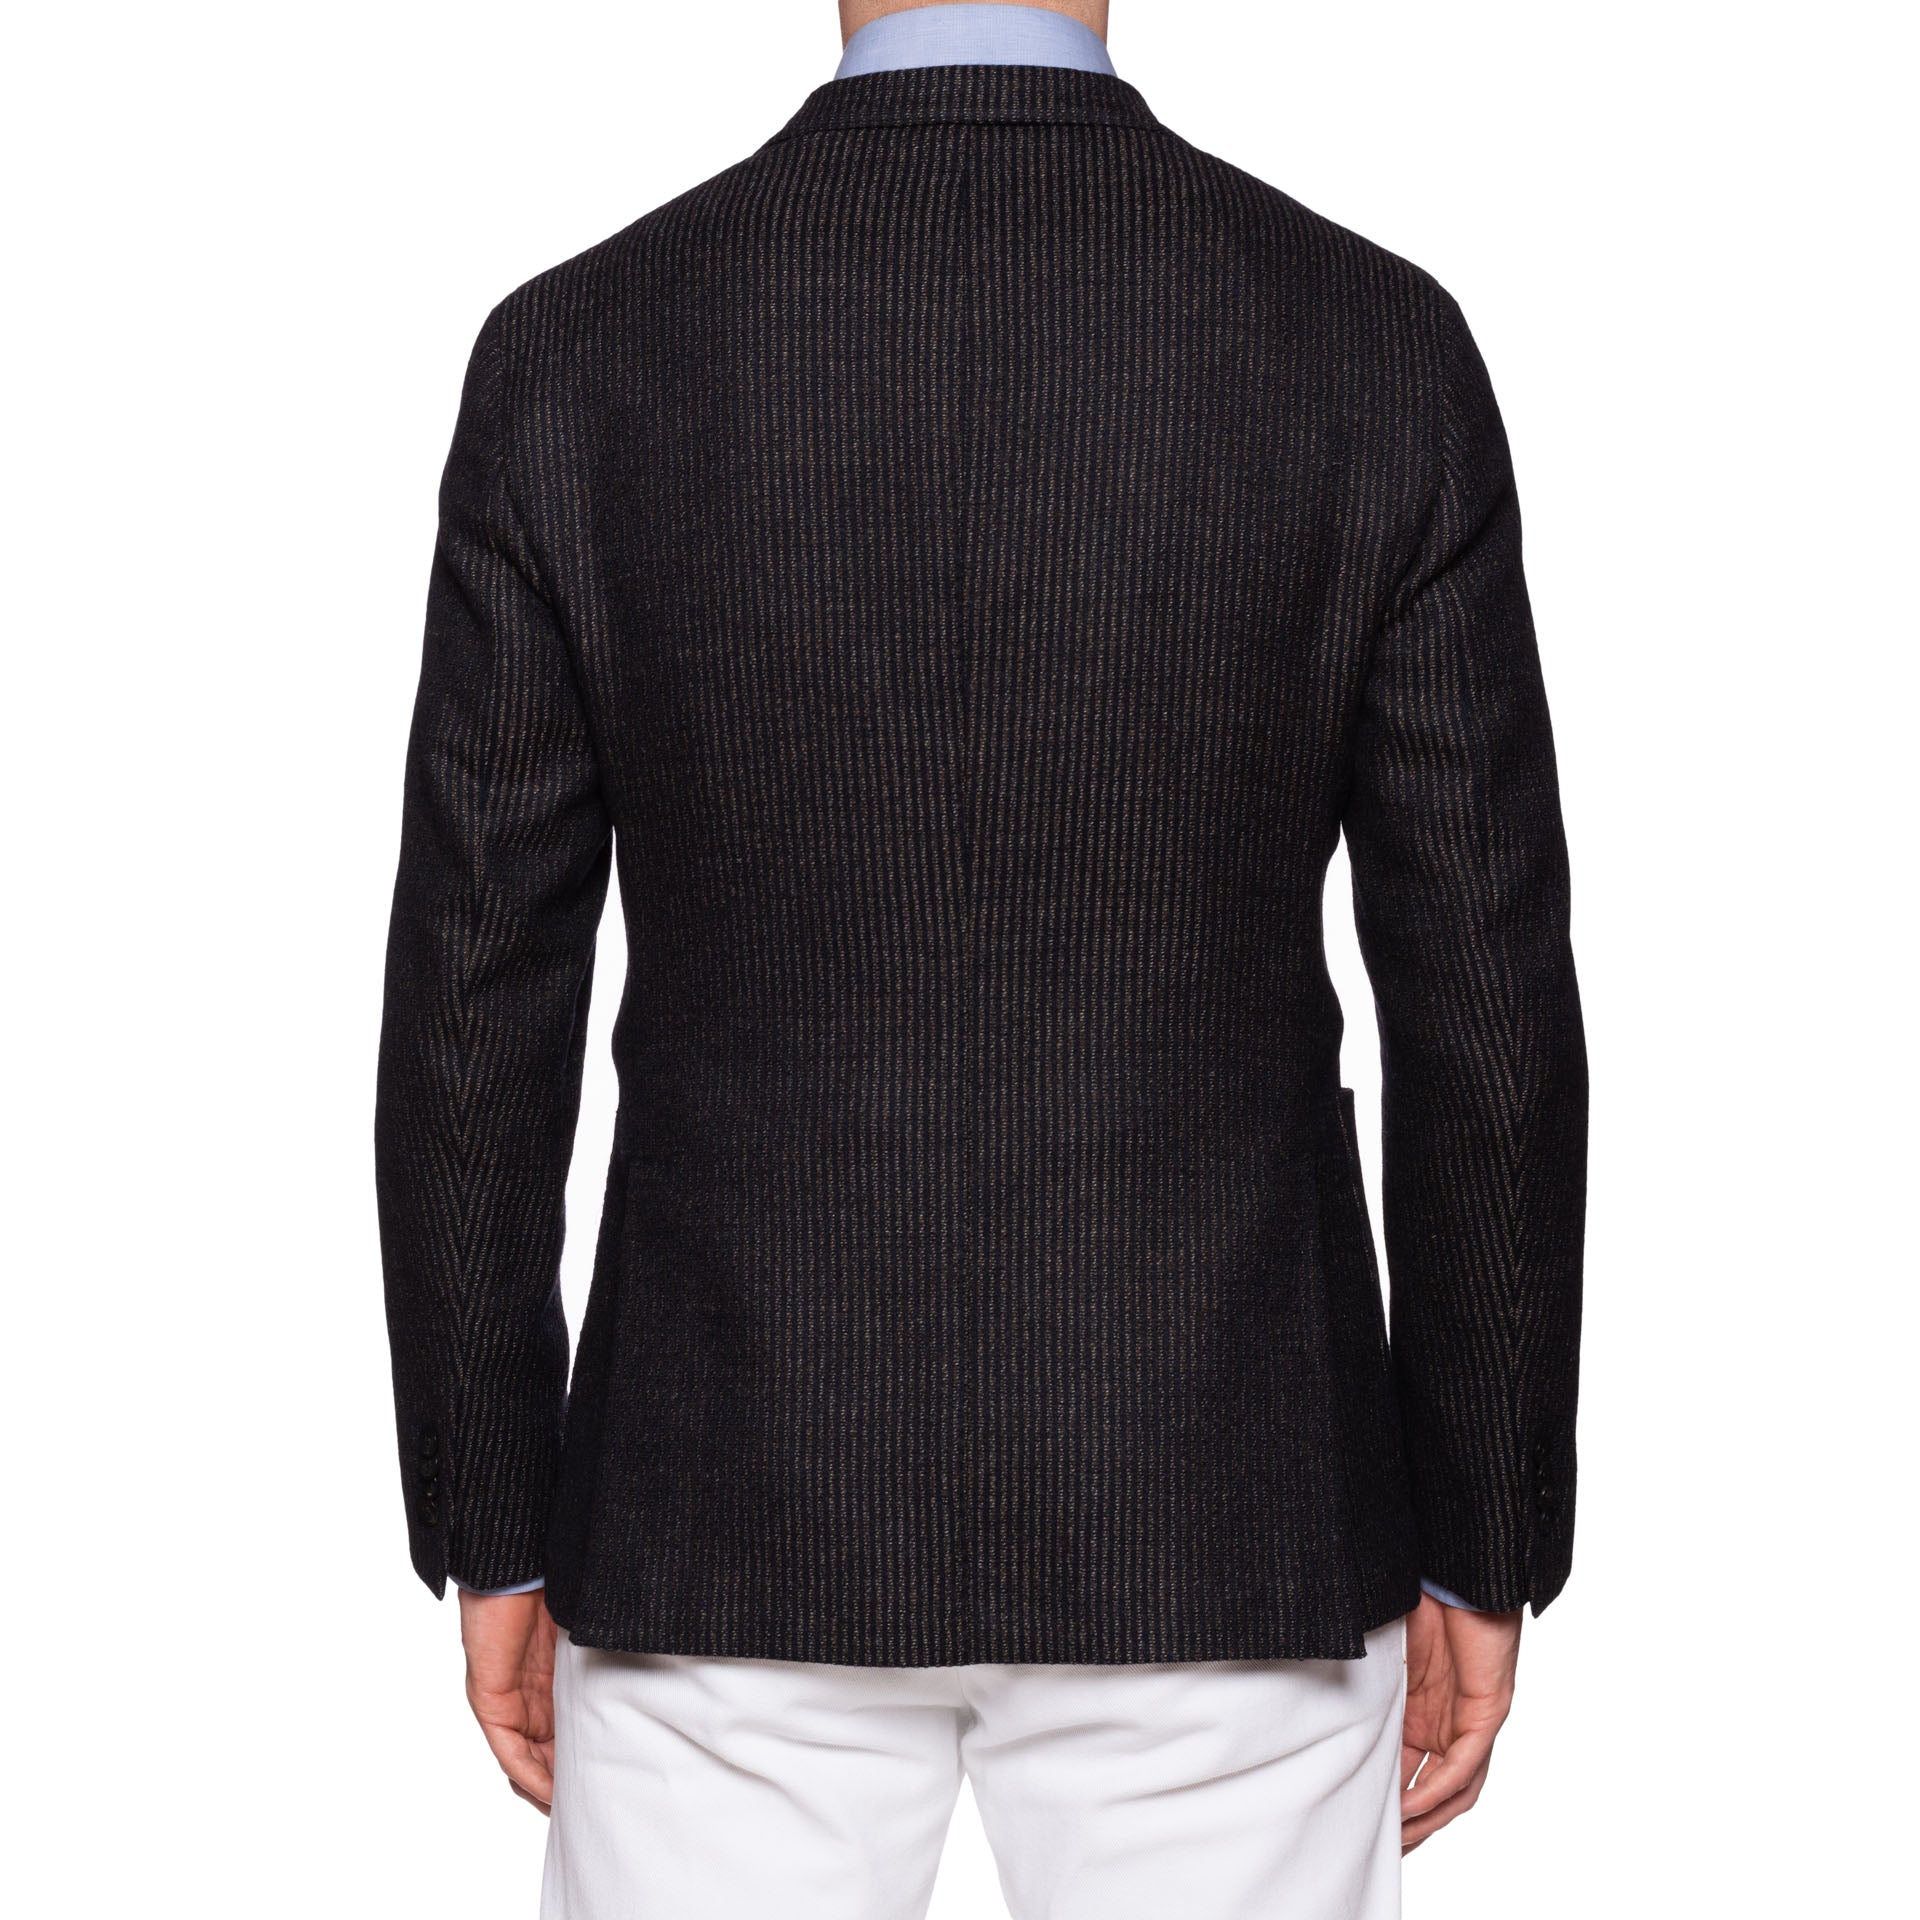 BOGLIOLI "K.Jacket" Brown Striped Wool-Cotton-Cashmere Unlined Jacket 50 NEW 40 BOGLIOLI